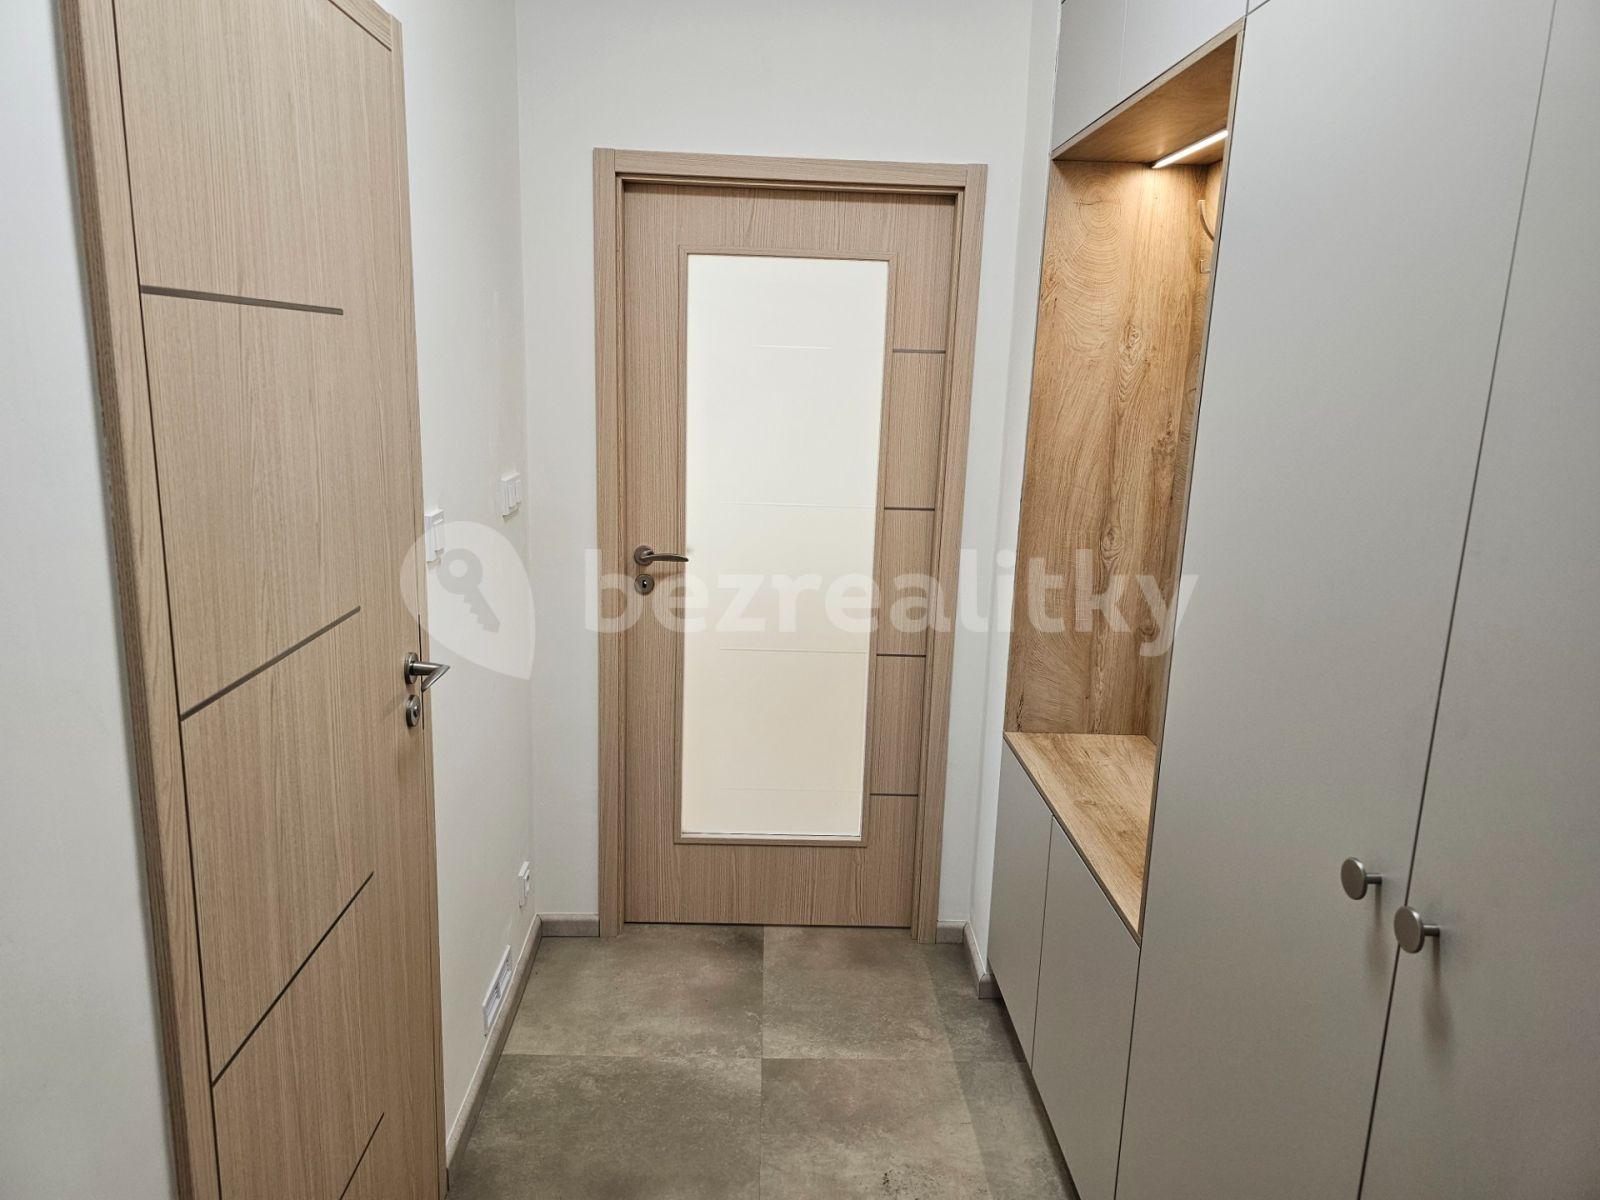 1 bedroom with open-plan kitchen flat for sale, 56 m², Bělohorská, Prague, Prague